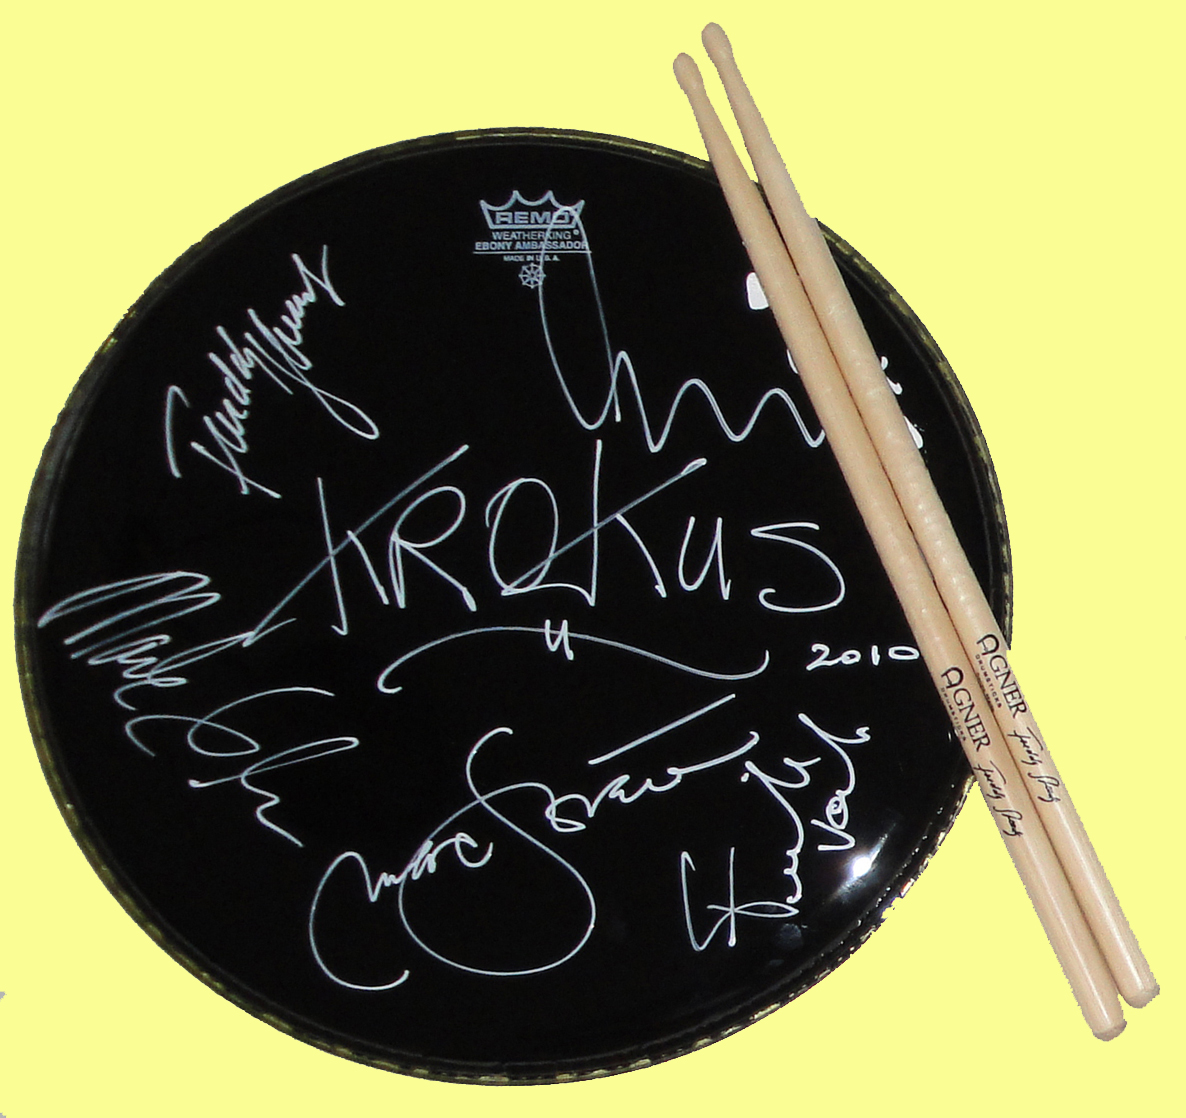 Krokus signed drumhead with sticks